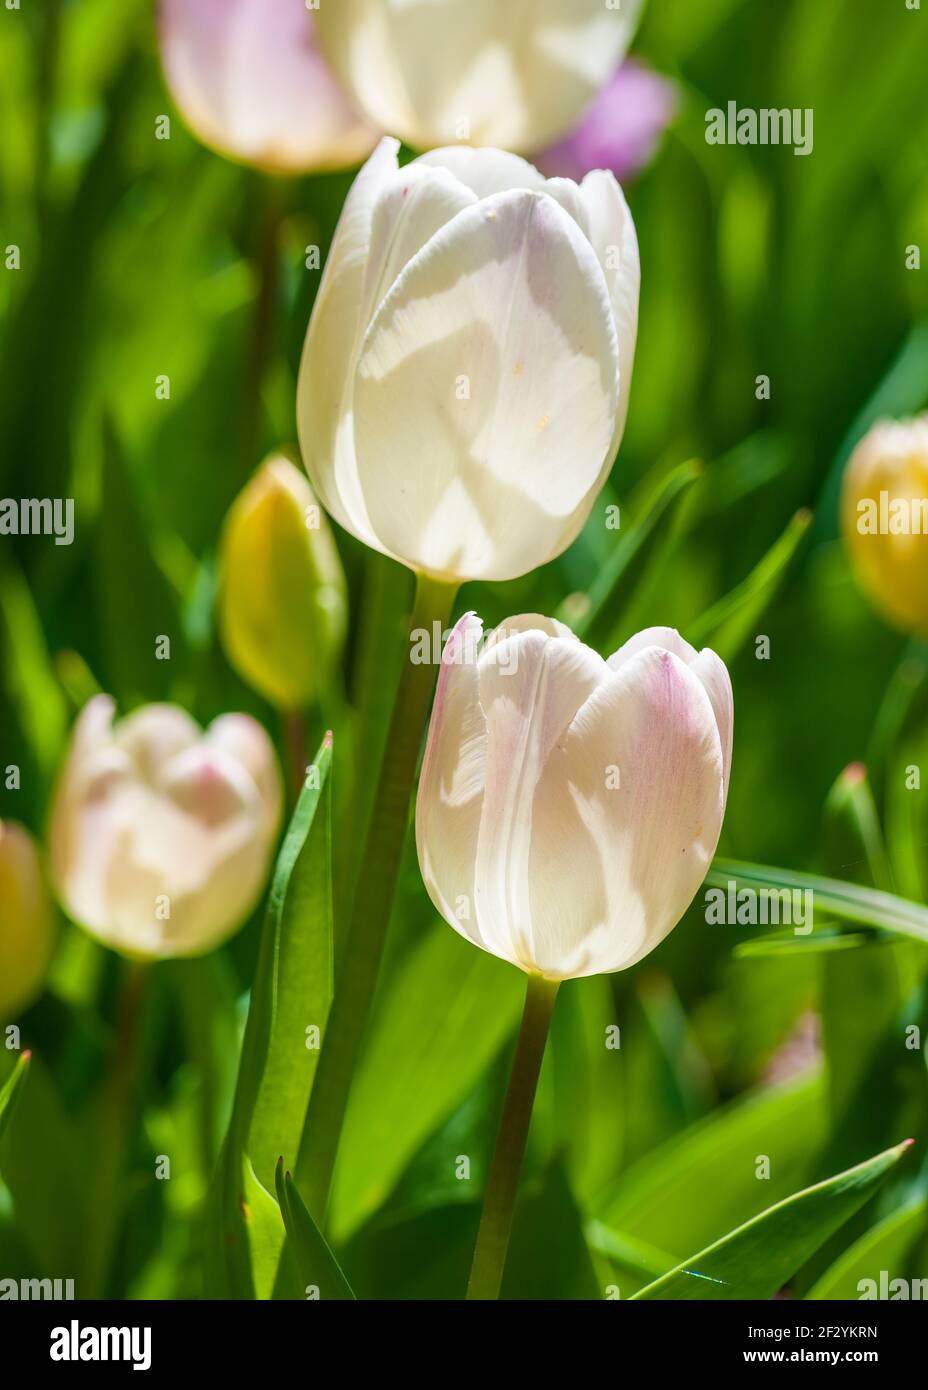 White triumph tulips. New England Botanic Garden at Tower Hill, Boylston, MA, USA Stock Photo